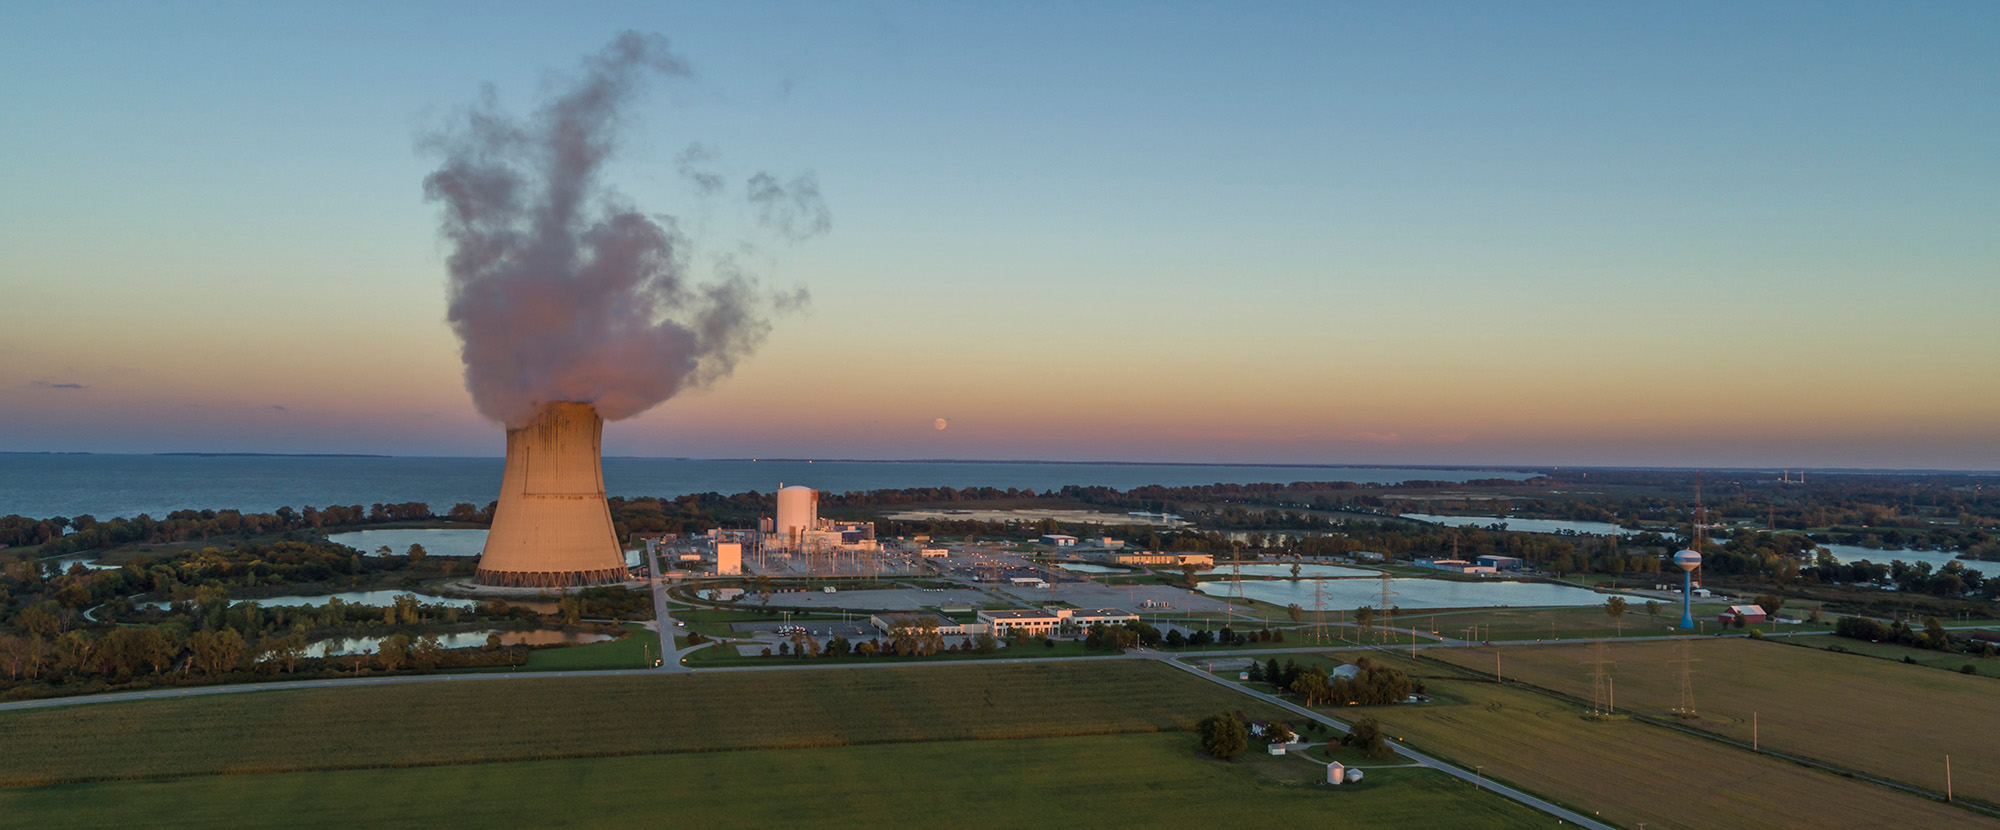 019_Peter_Essick-Nuclear_Power_Plant_Lake_Erie_Ohio.jpg